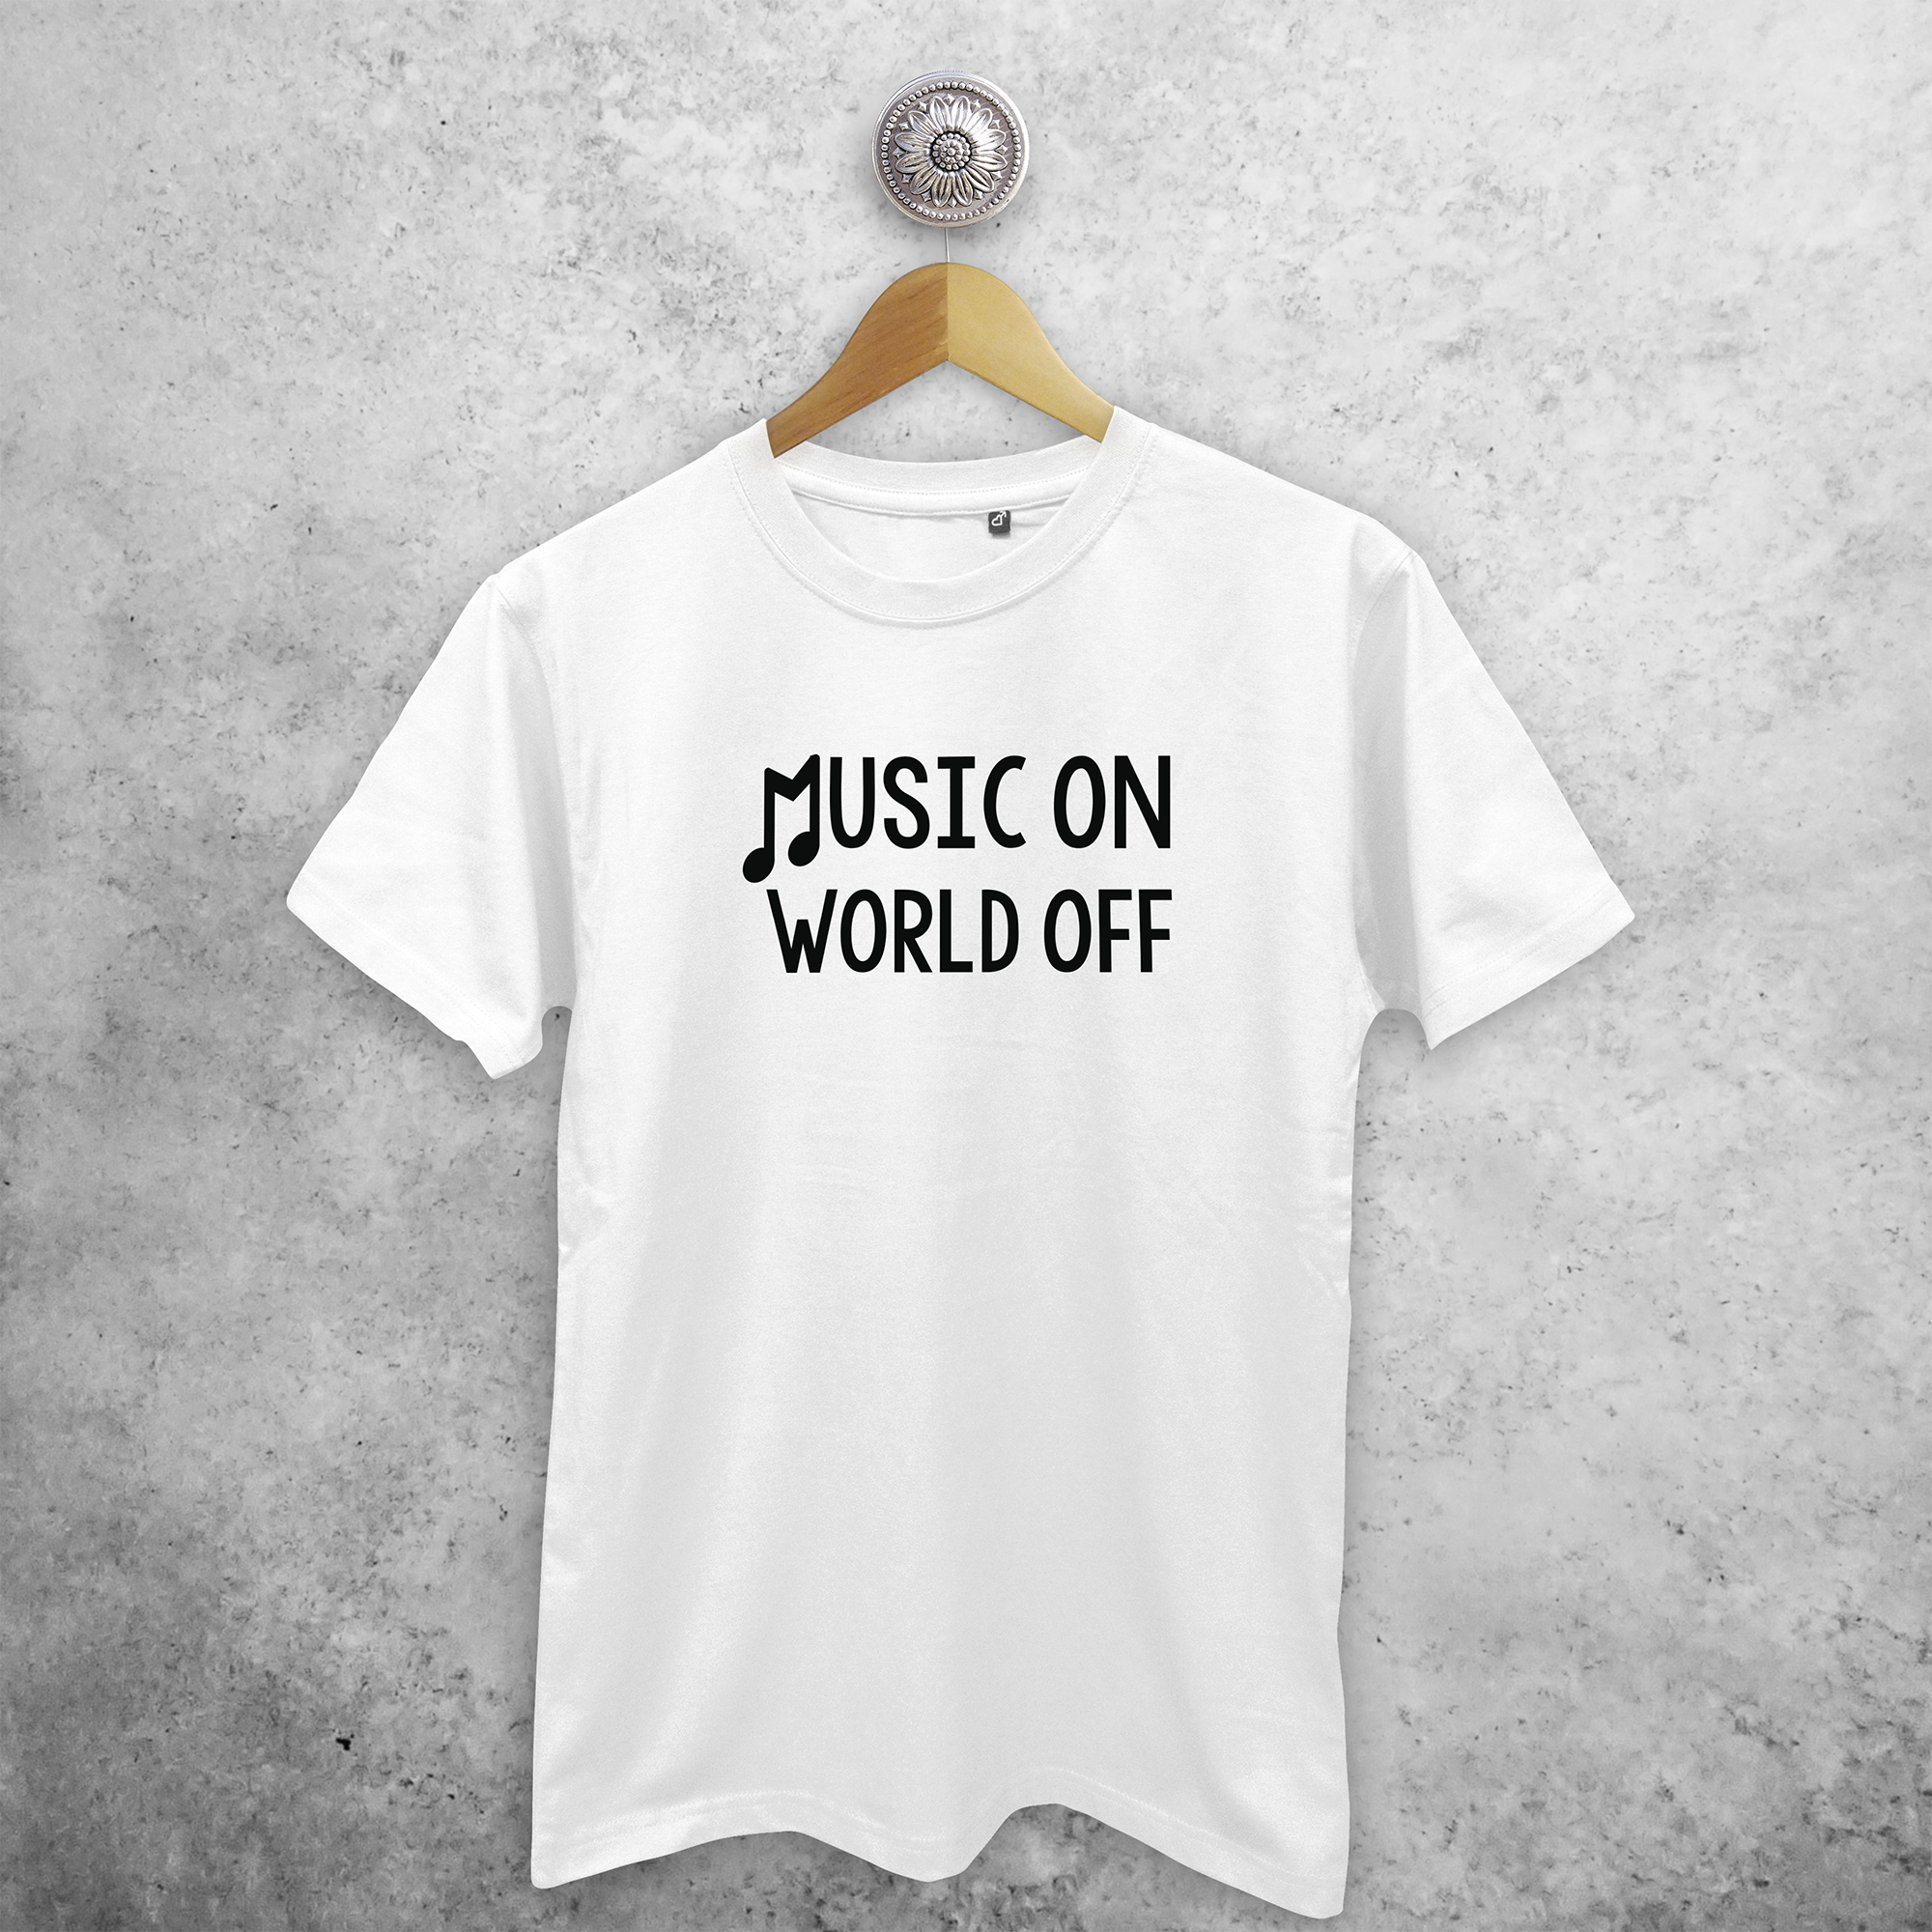 'Music on - World off' adult shirt